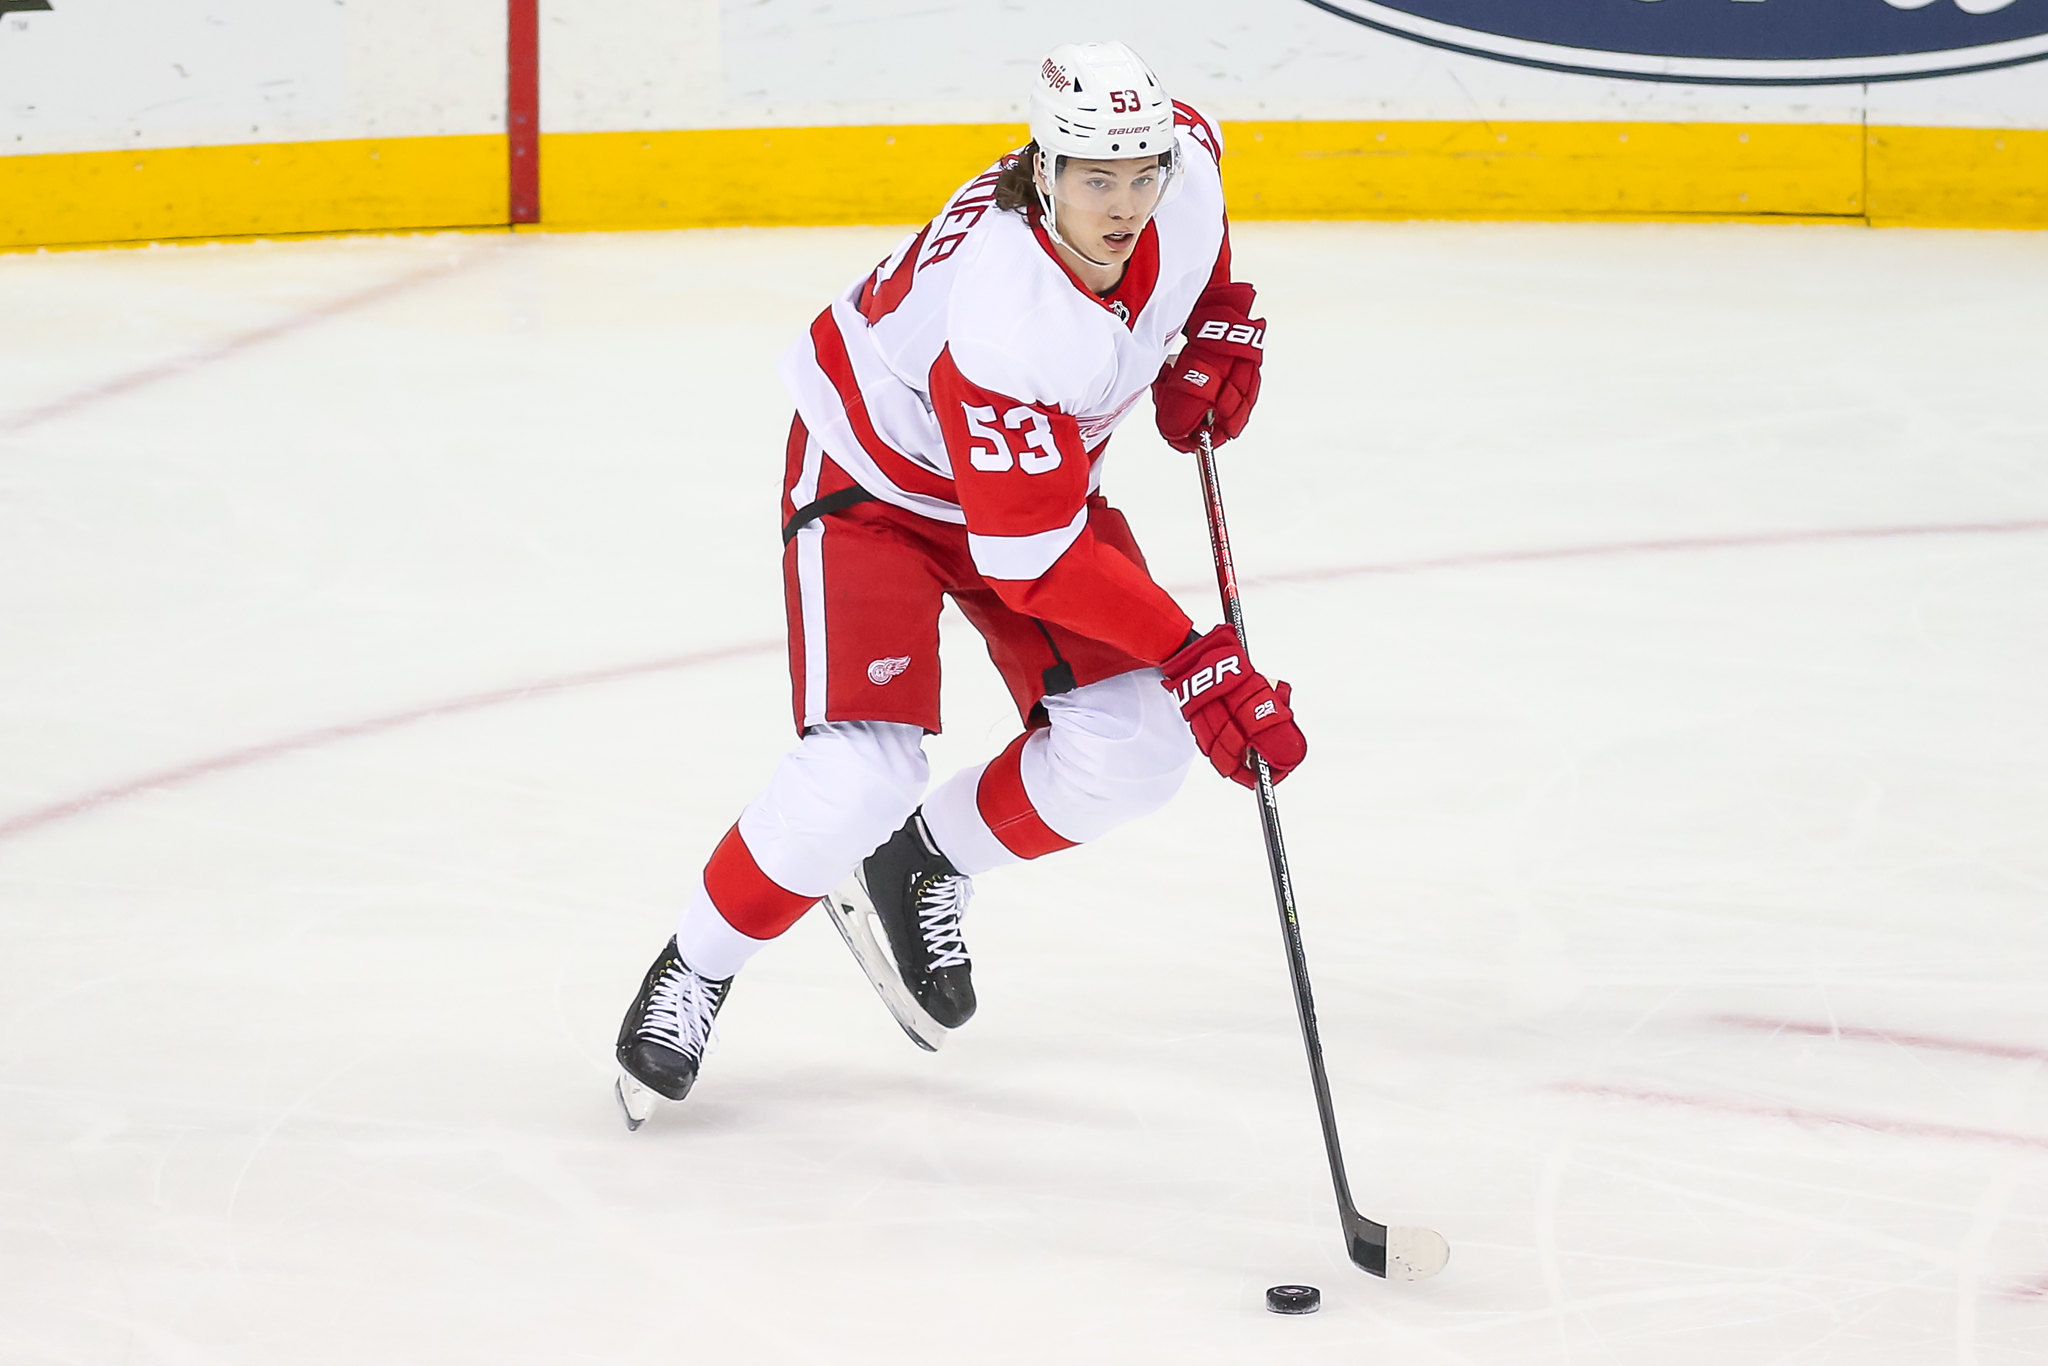 Detroit Red Wings' Prospect Simon Edvinsson is One Step Closer to Detroit